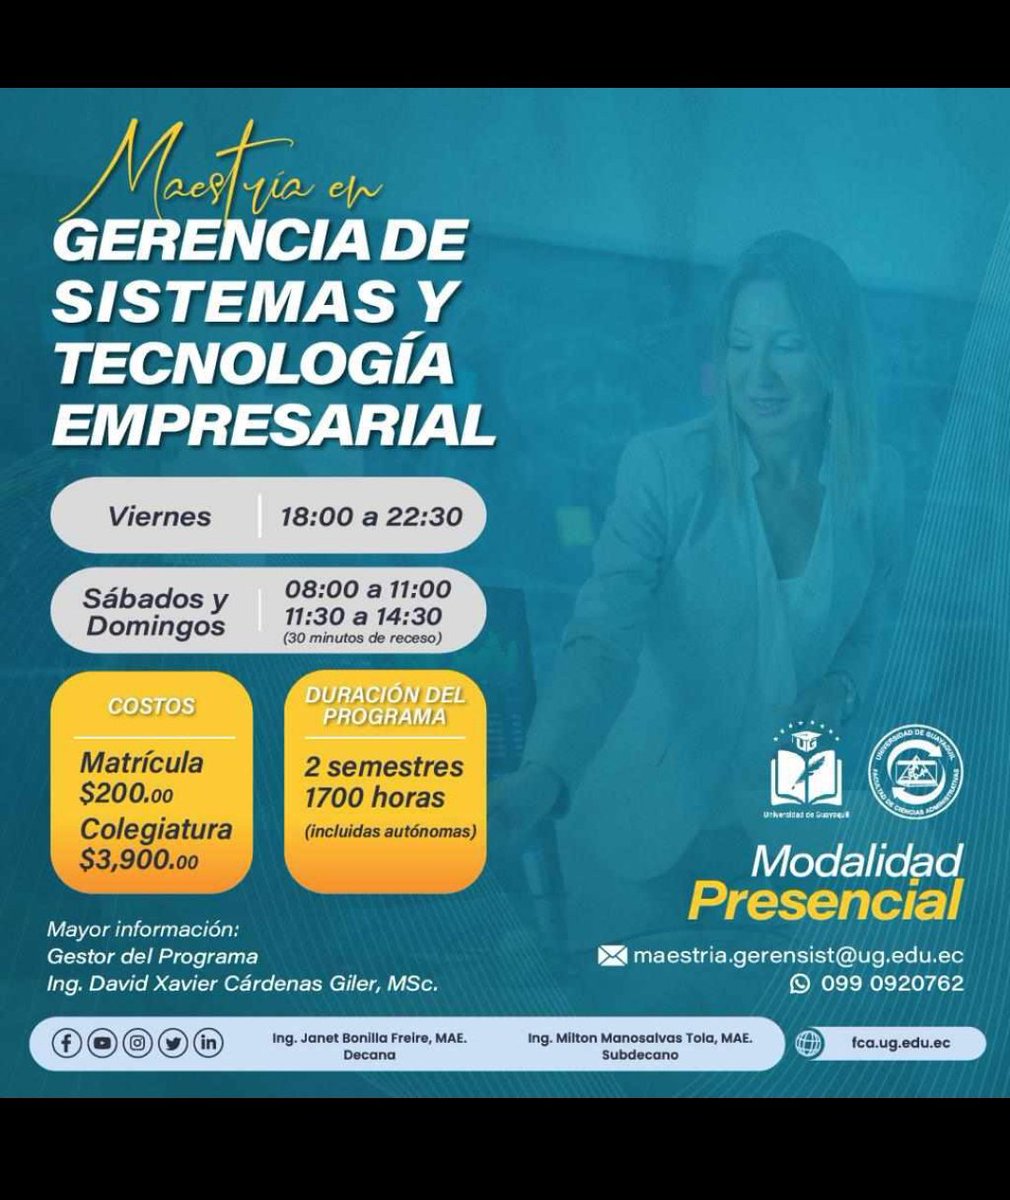 📍#CienciasAdministrativas
📍#UniversidadDeGuayaquil
📍#Guayaquil #Ecuador
📍#NoticiasUG #SoyFCAUG
📍#Maestria #GerenciaDeSistemas
📍#TecnologiaEmpresarial #TransformacionDigital
📍#InnovacionTecnologica #LiderazgoTI
📍#DesarrolloProfesional #FormacionProfesional